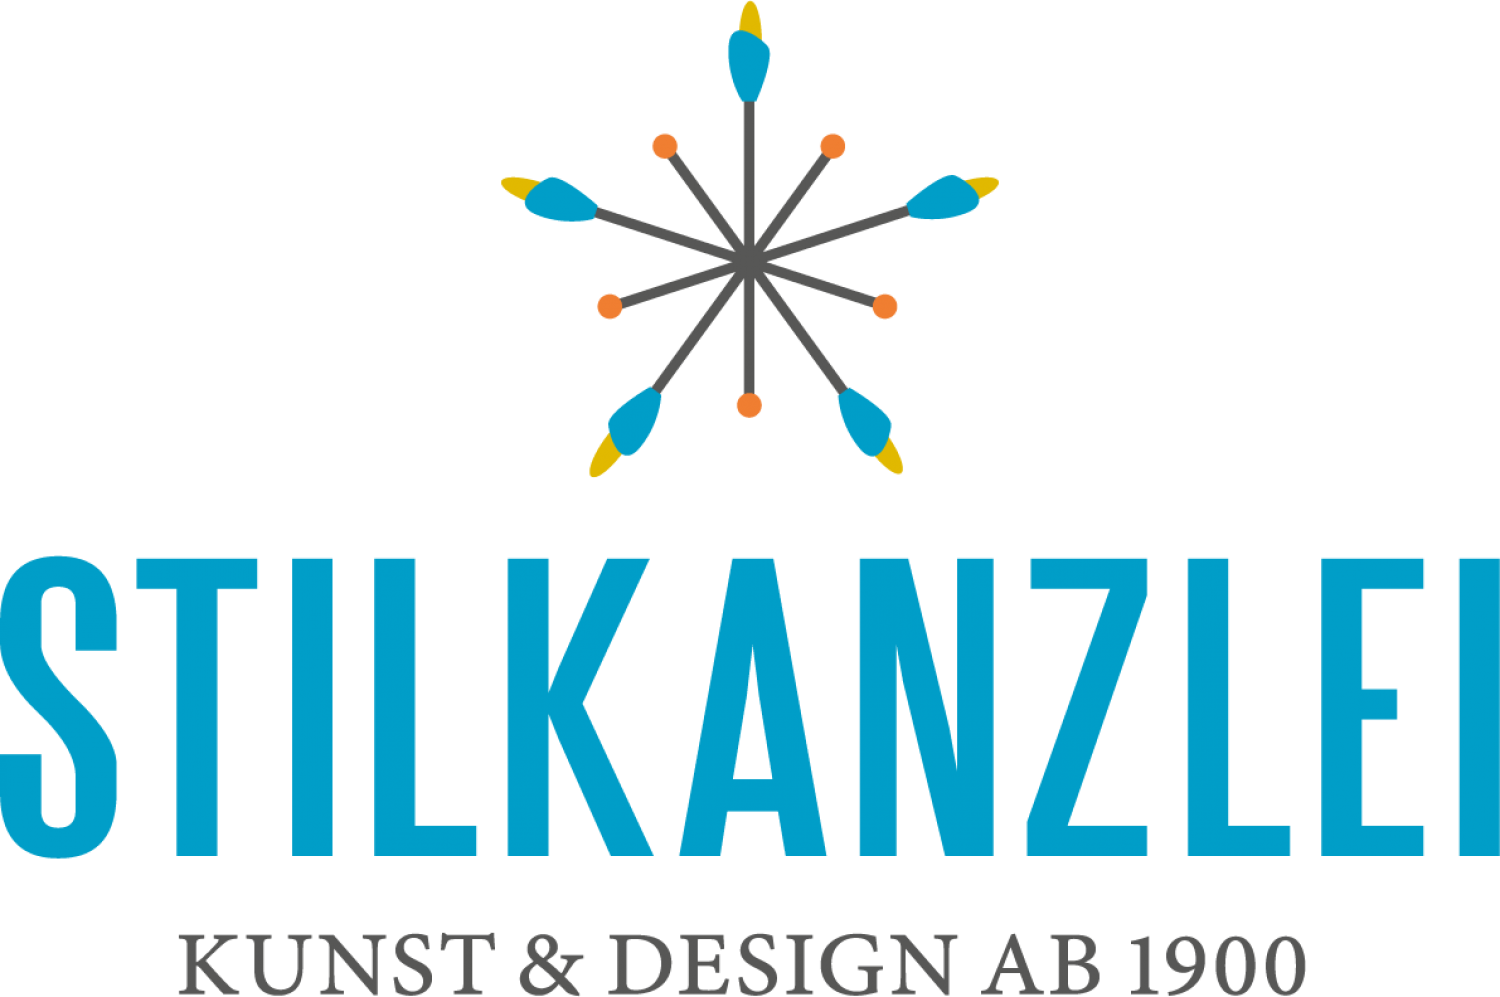 Logo Stilkanzlei